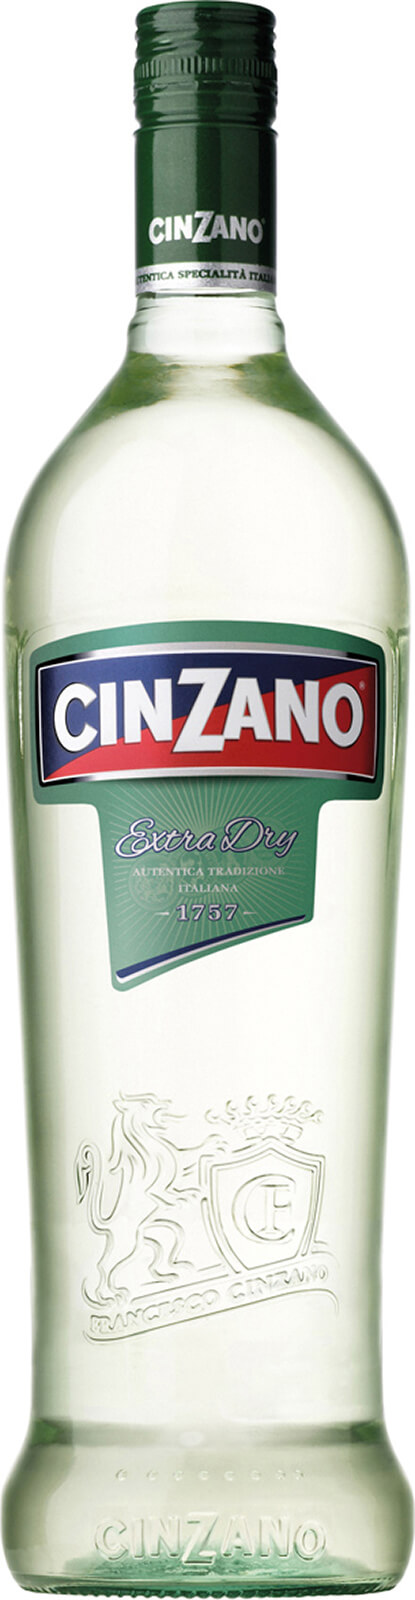 Cinzano Extra Dry bei Vermouth barfish.de kaufen